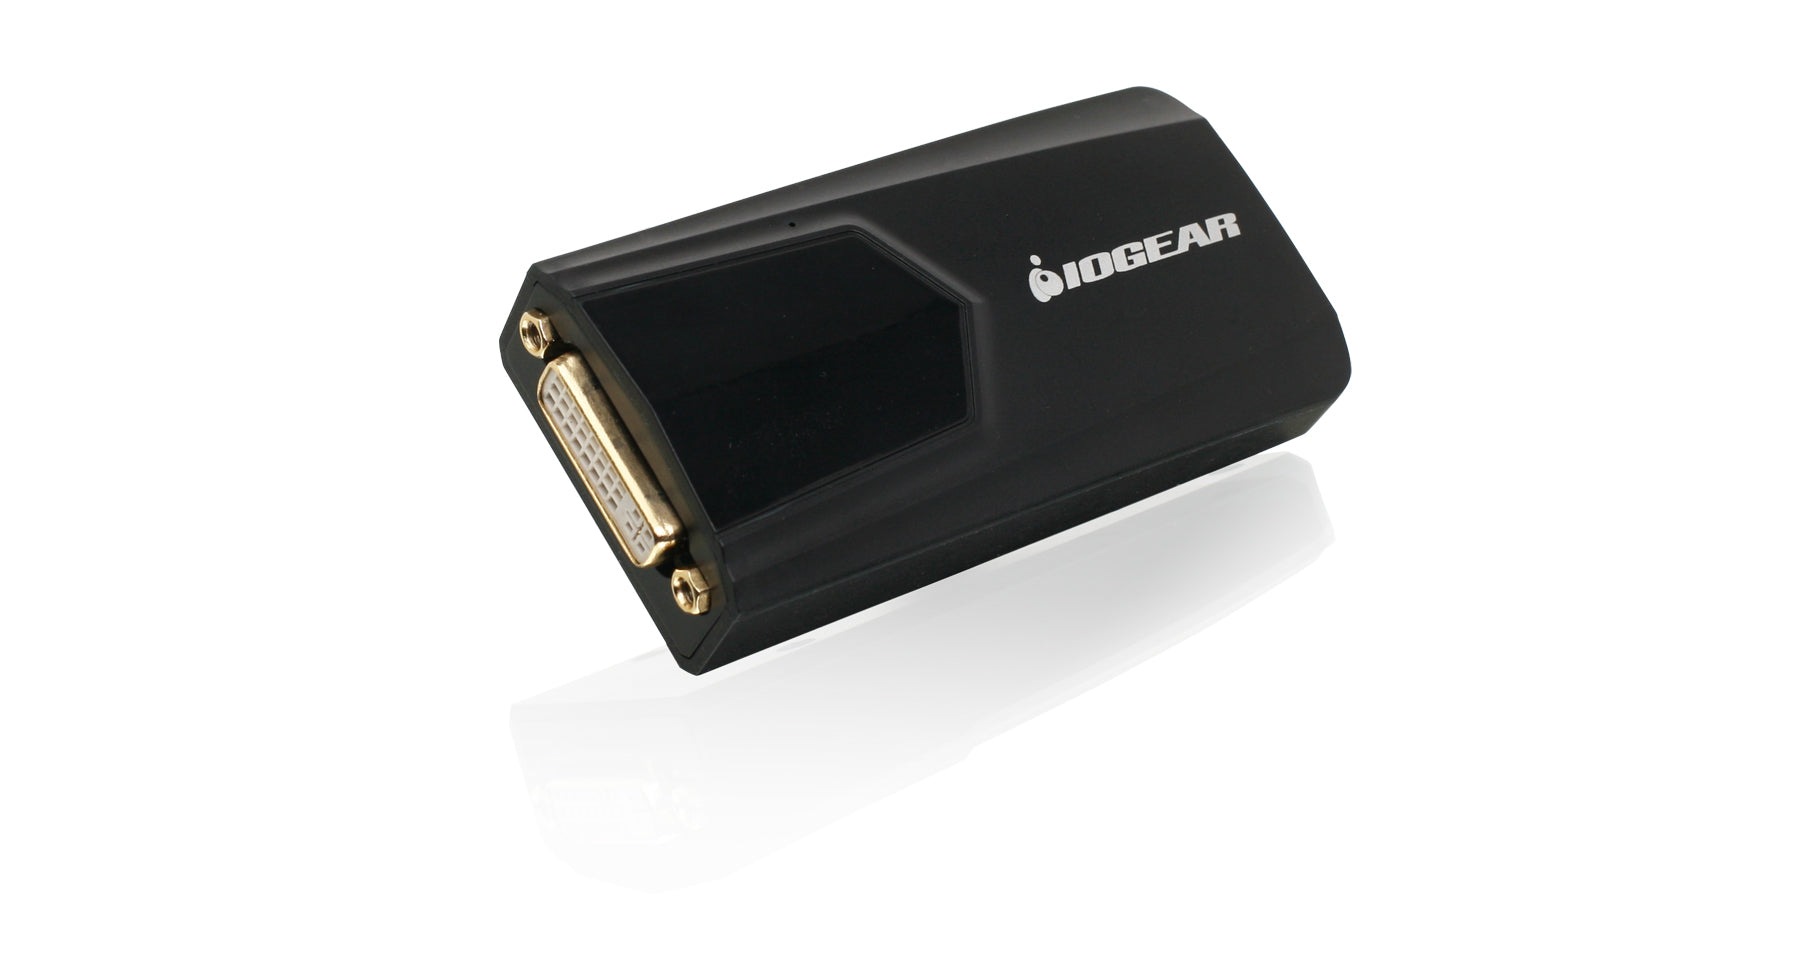 USB 3.0 External DVI Video Card